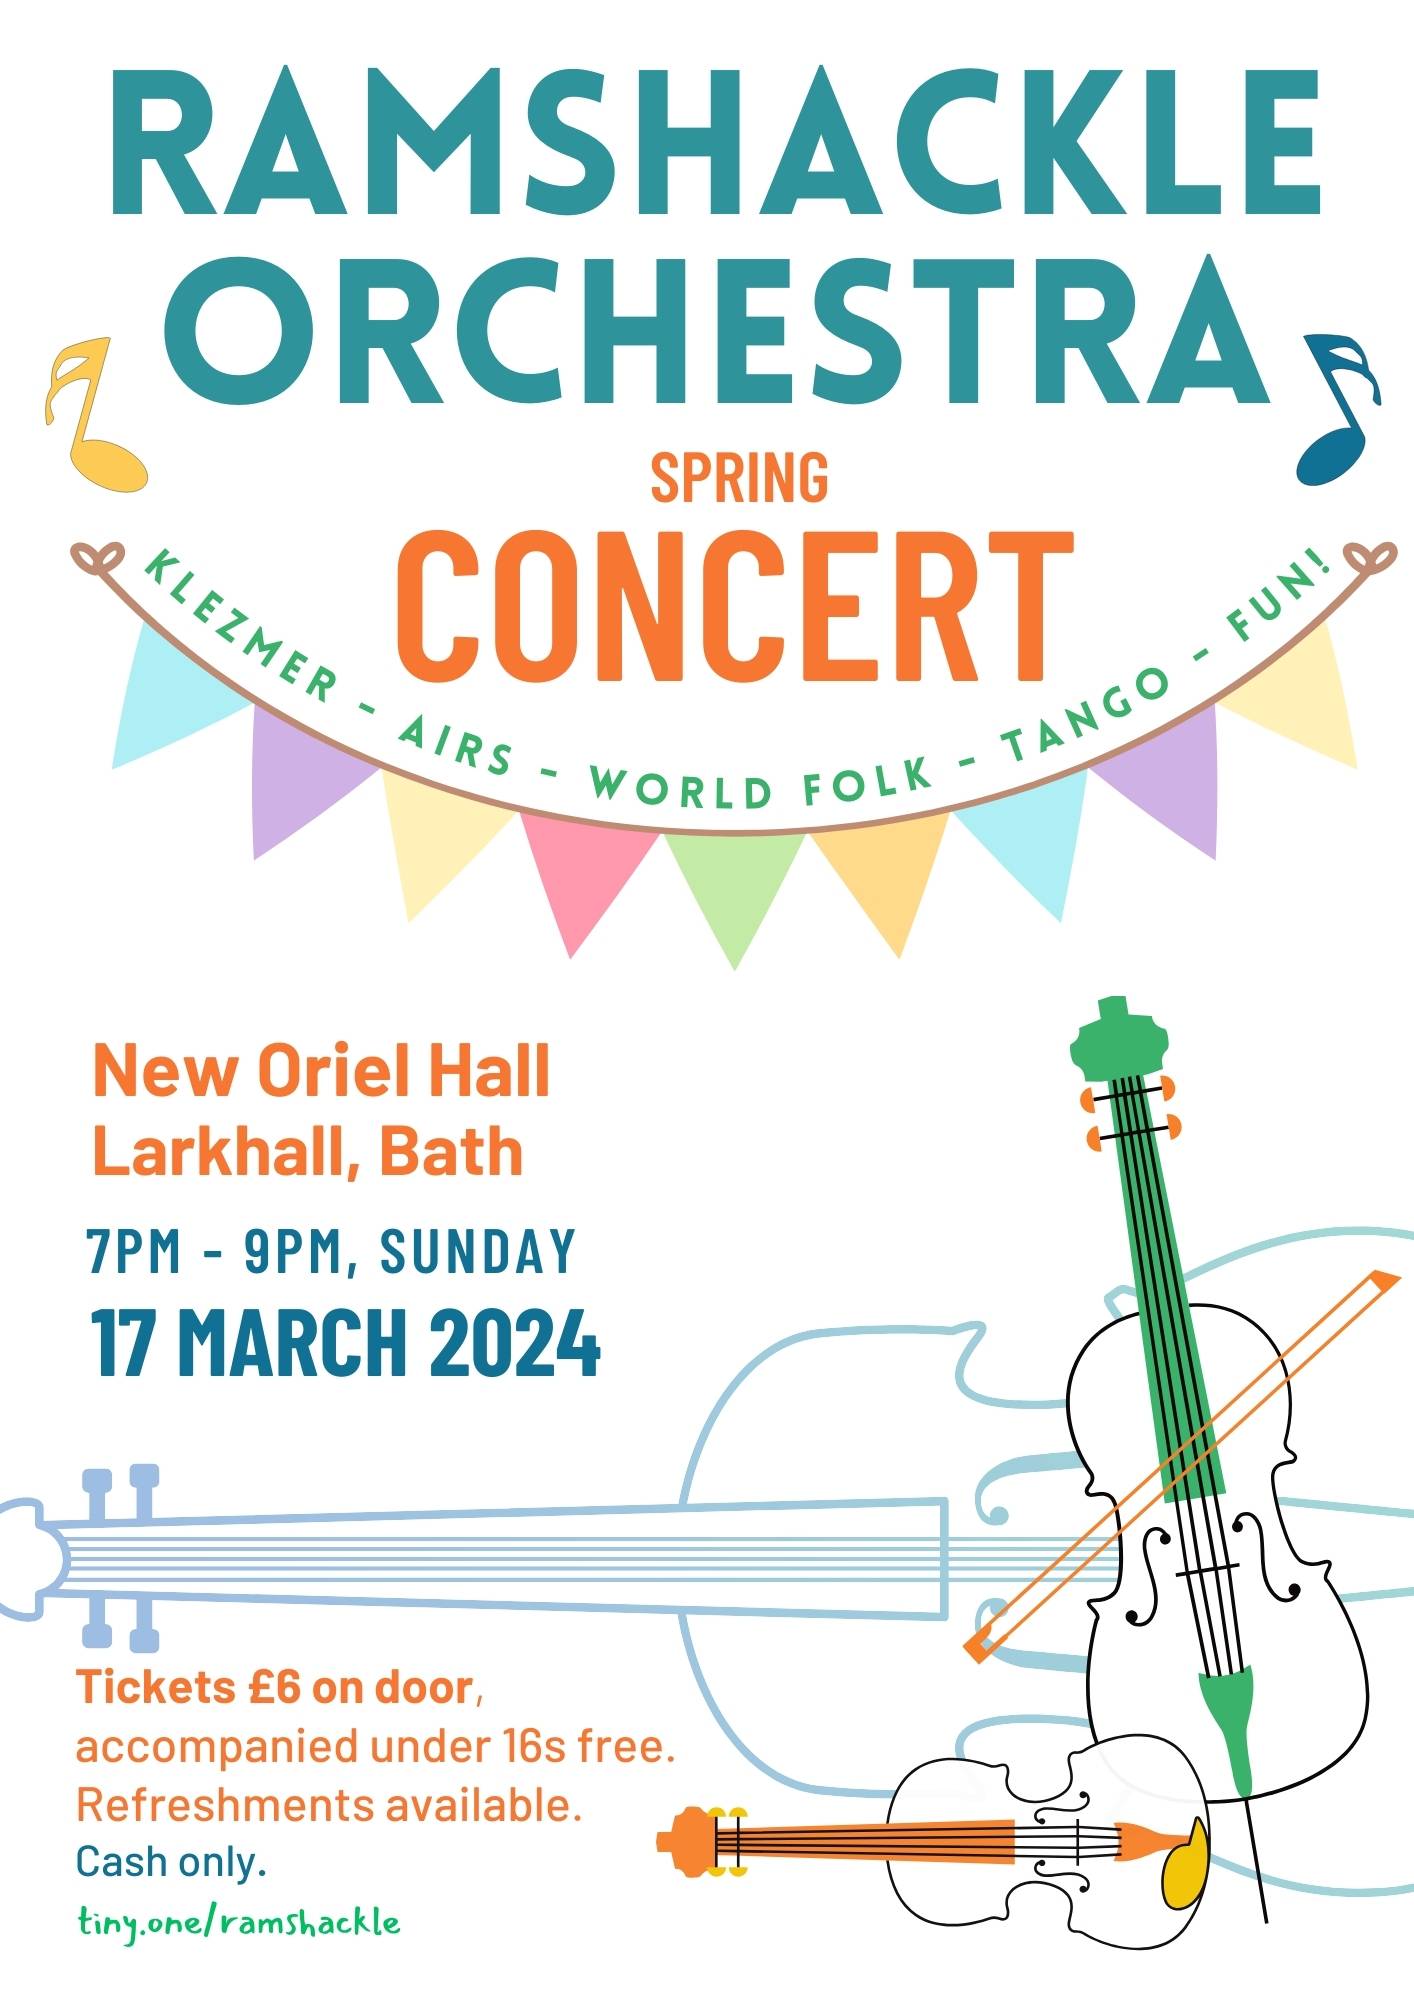 Ramshackle Orchestra's Spring Concert